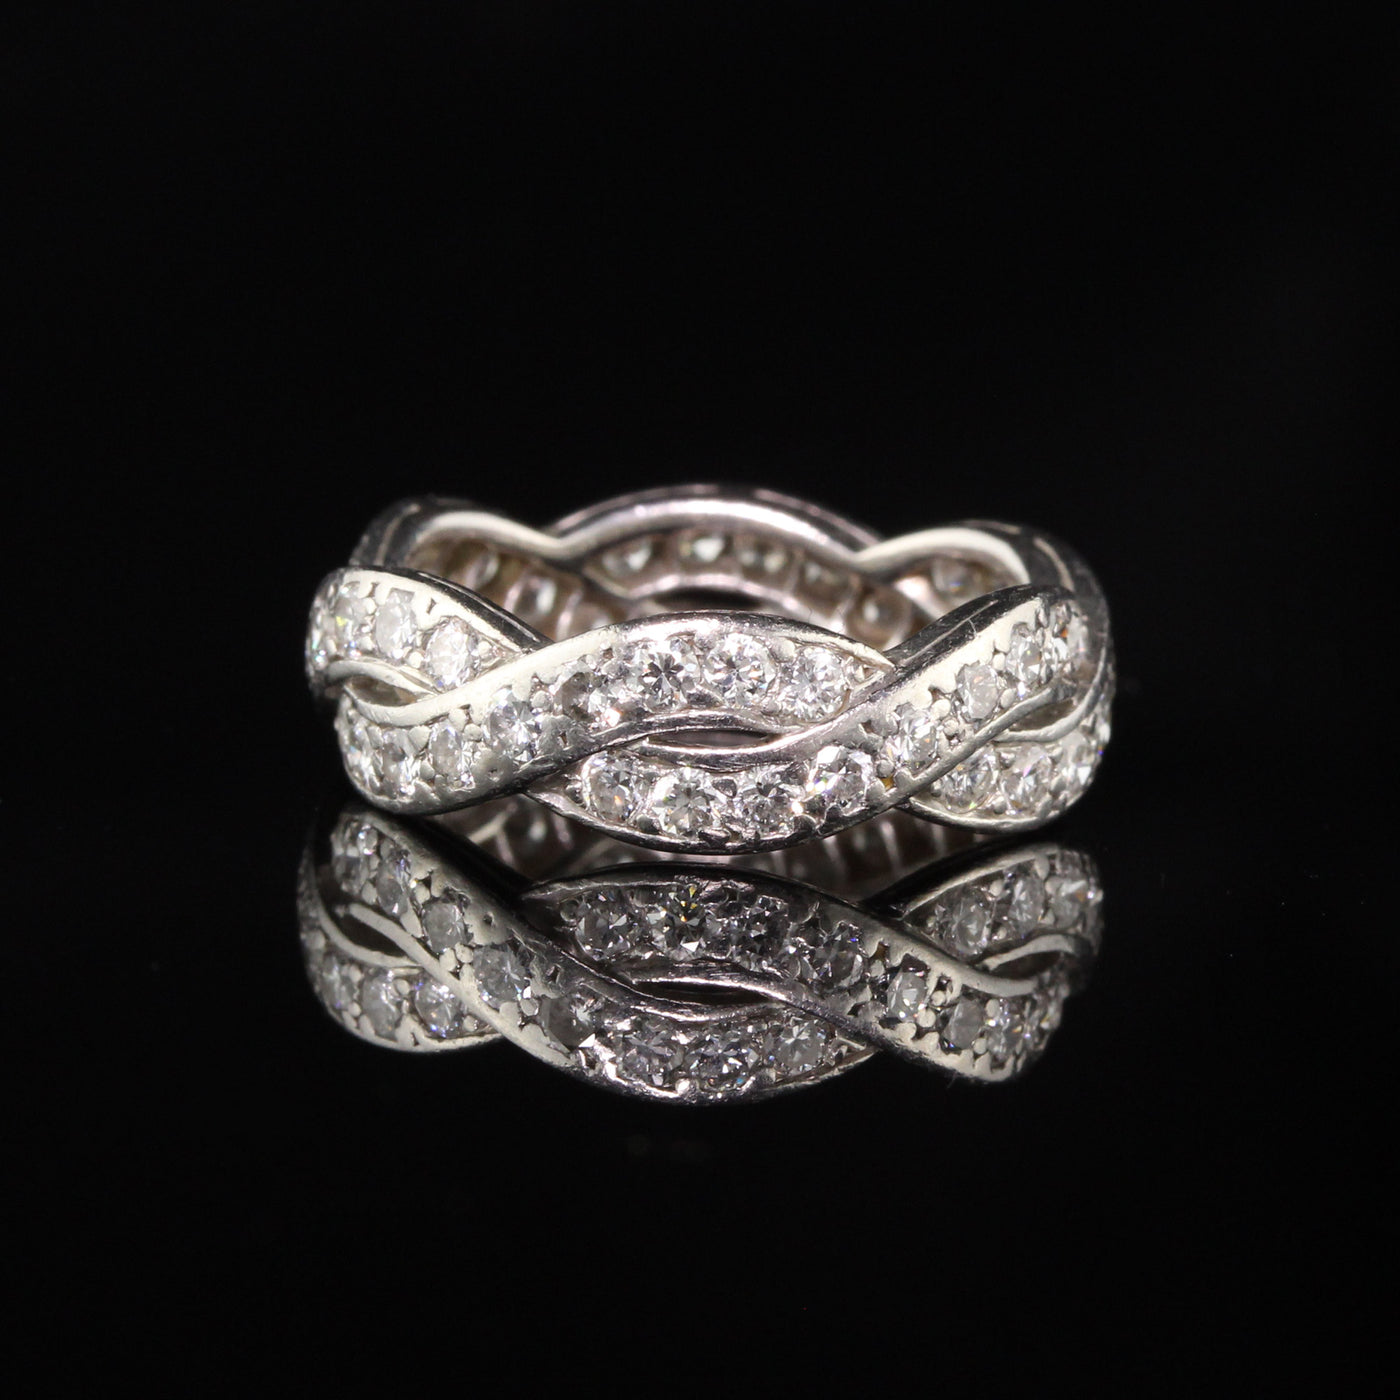 Van Cleef and Arpels Vintage Platinum Diamond Eternity Wedding Band - Size 5.5